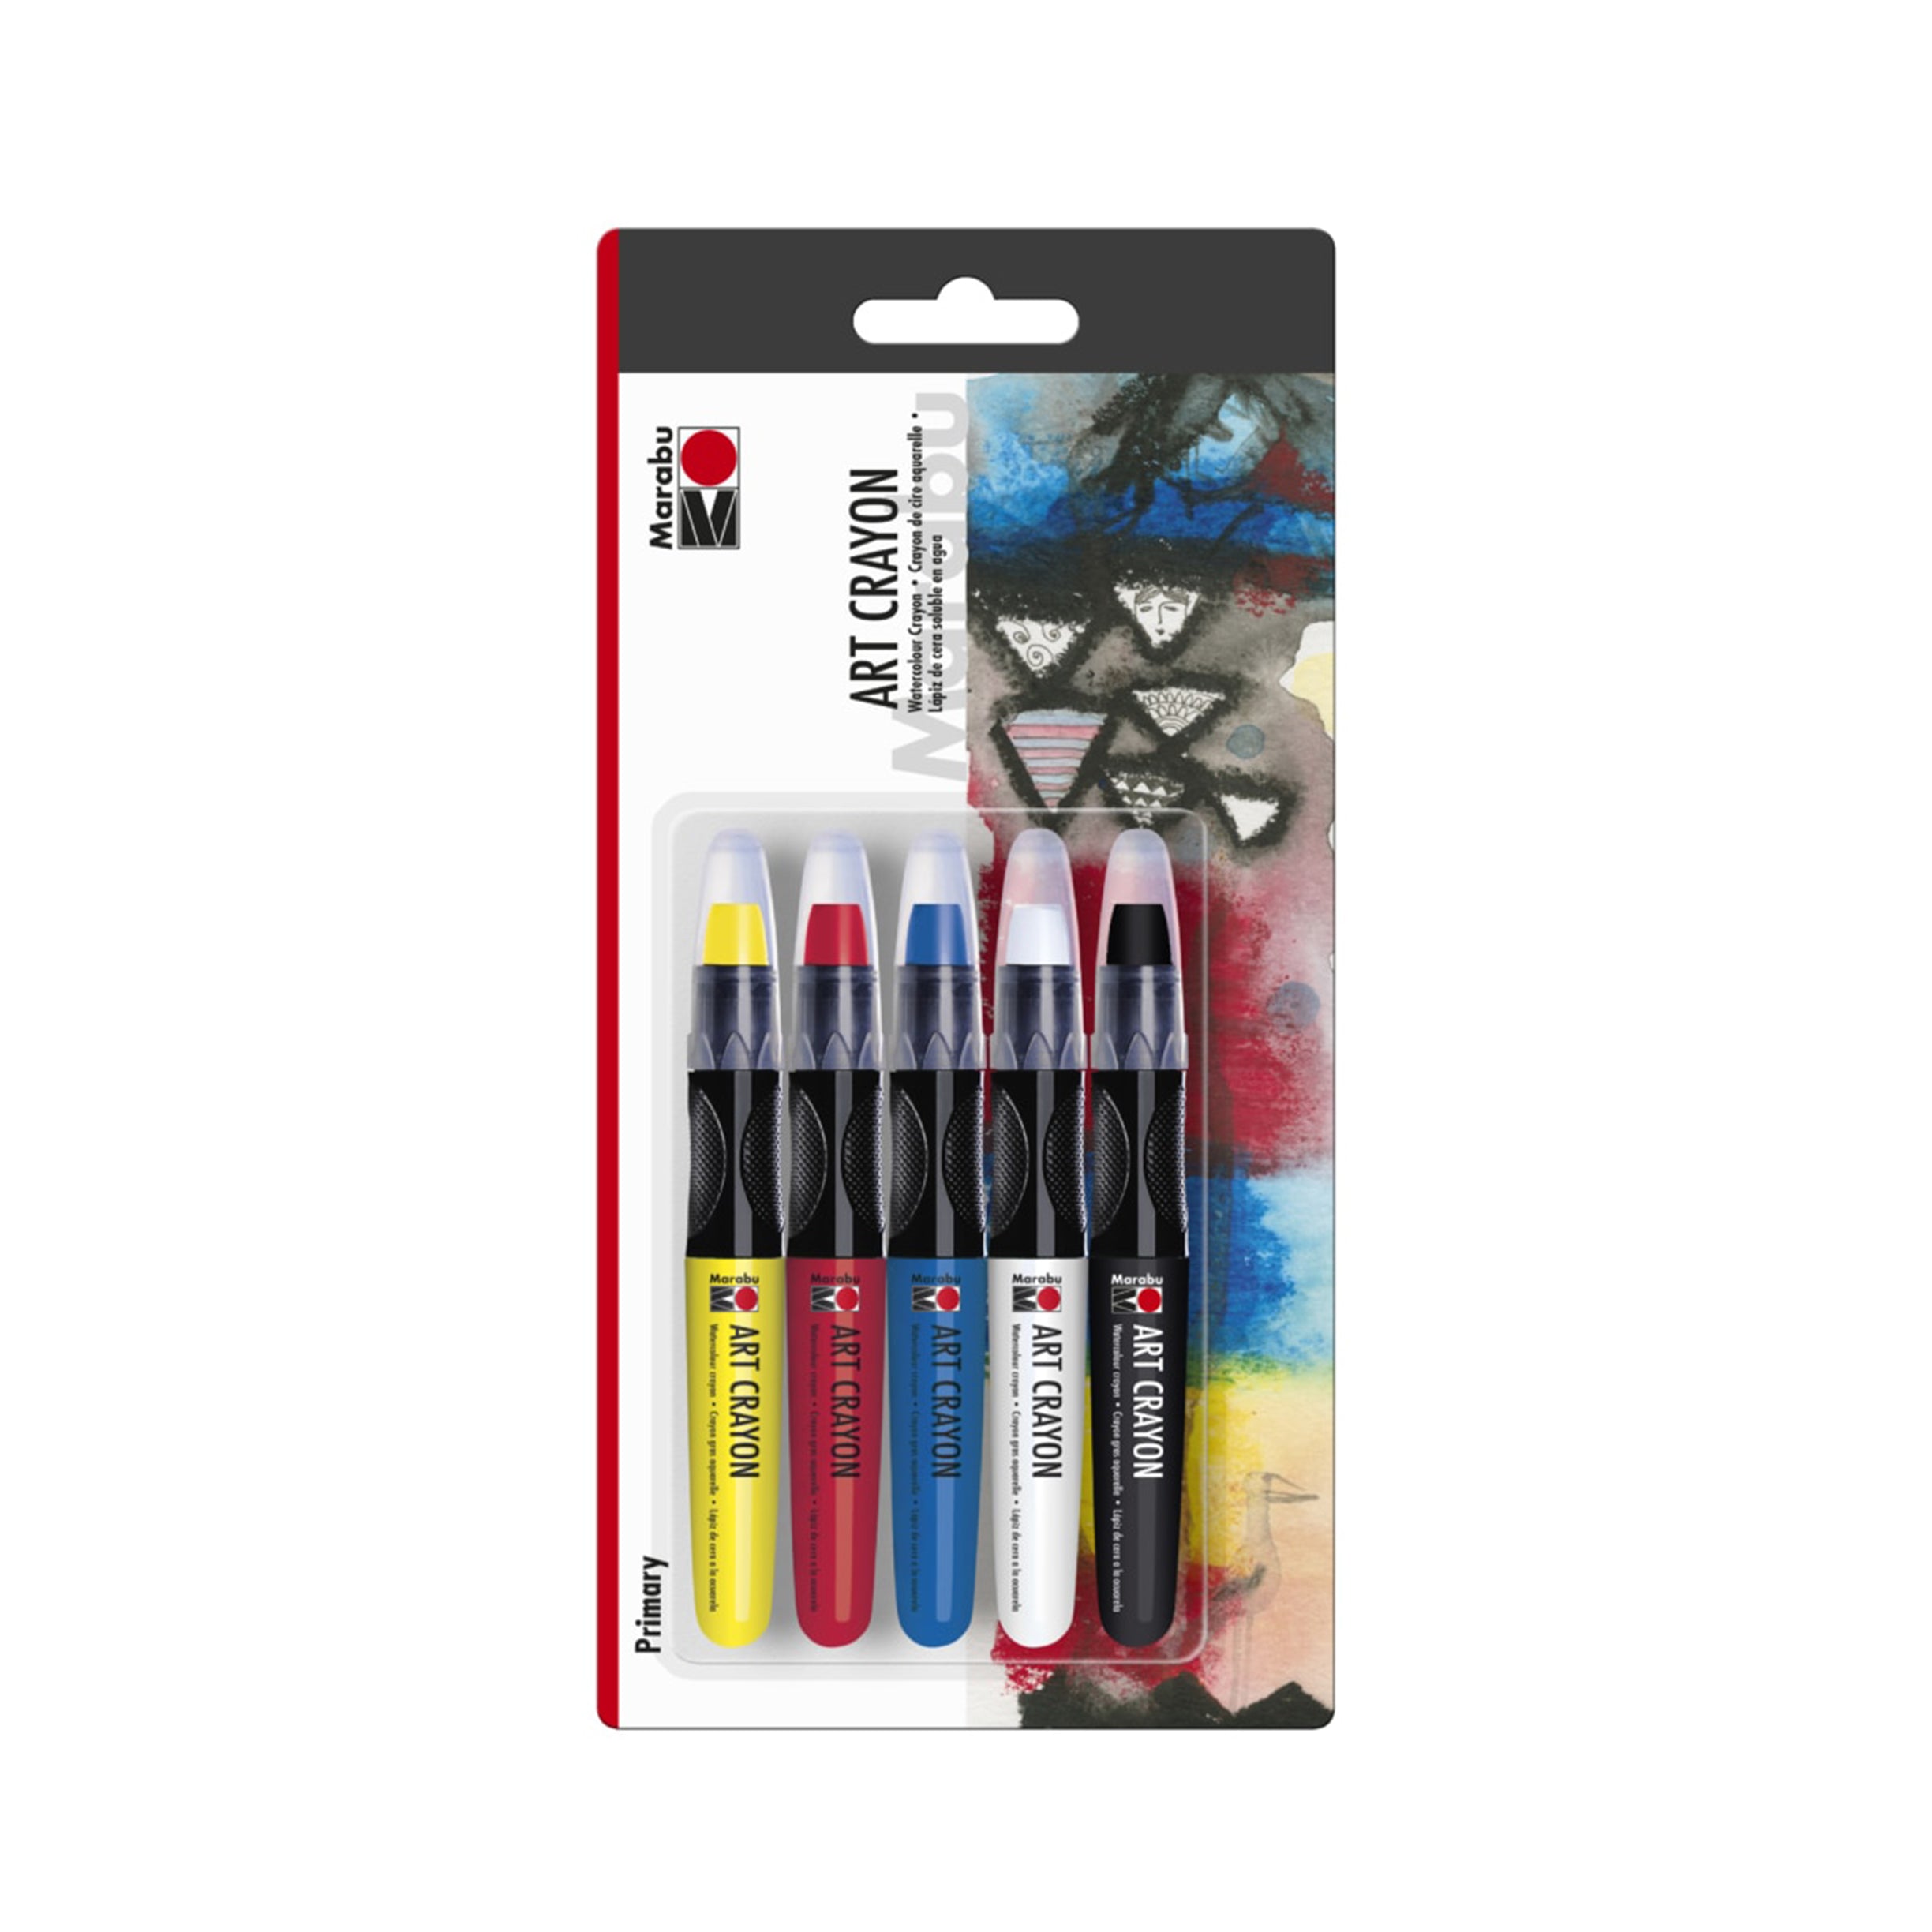 Marabu Mixed Media Art Crayons, Primary Set of 5